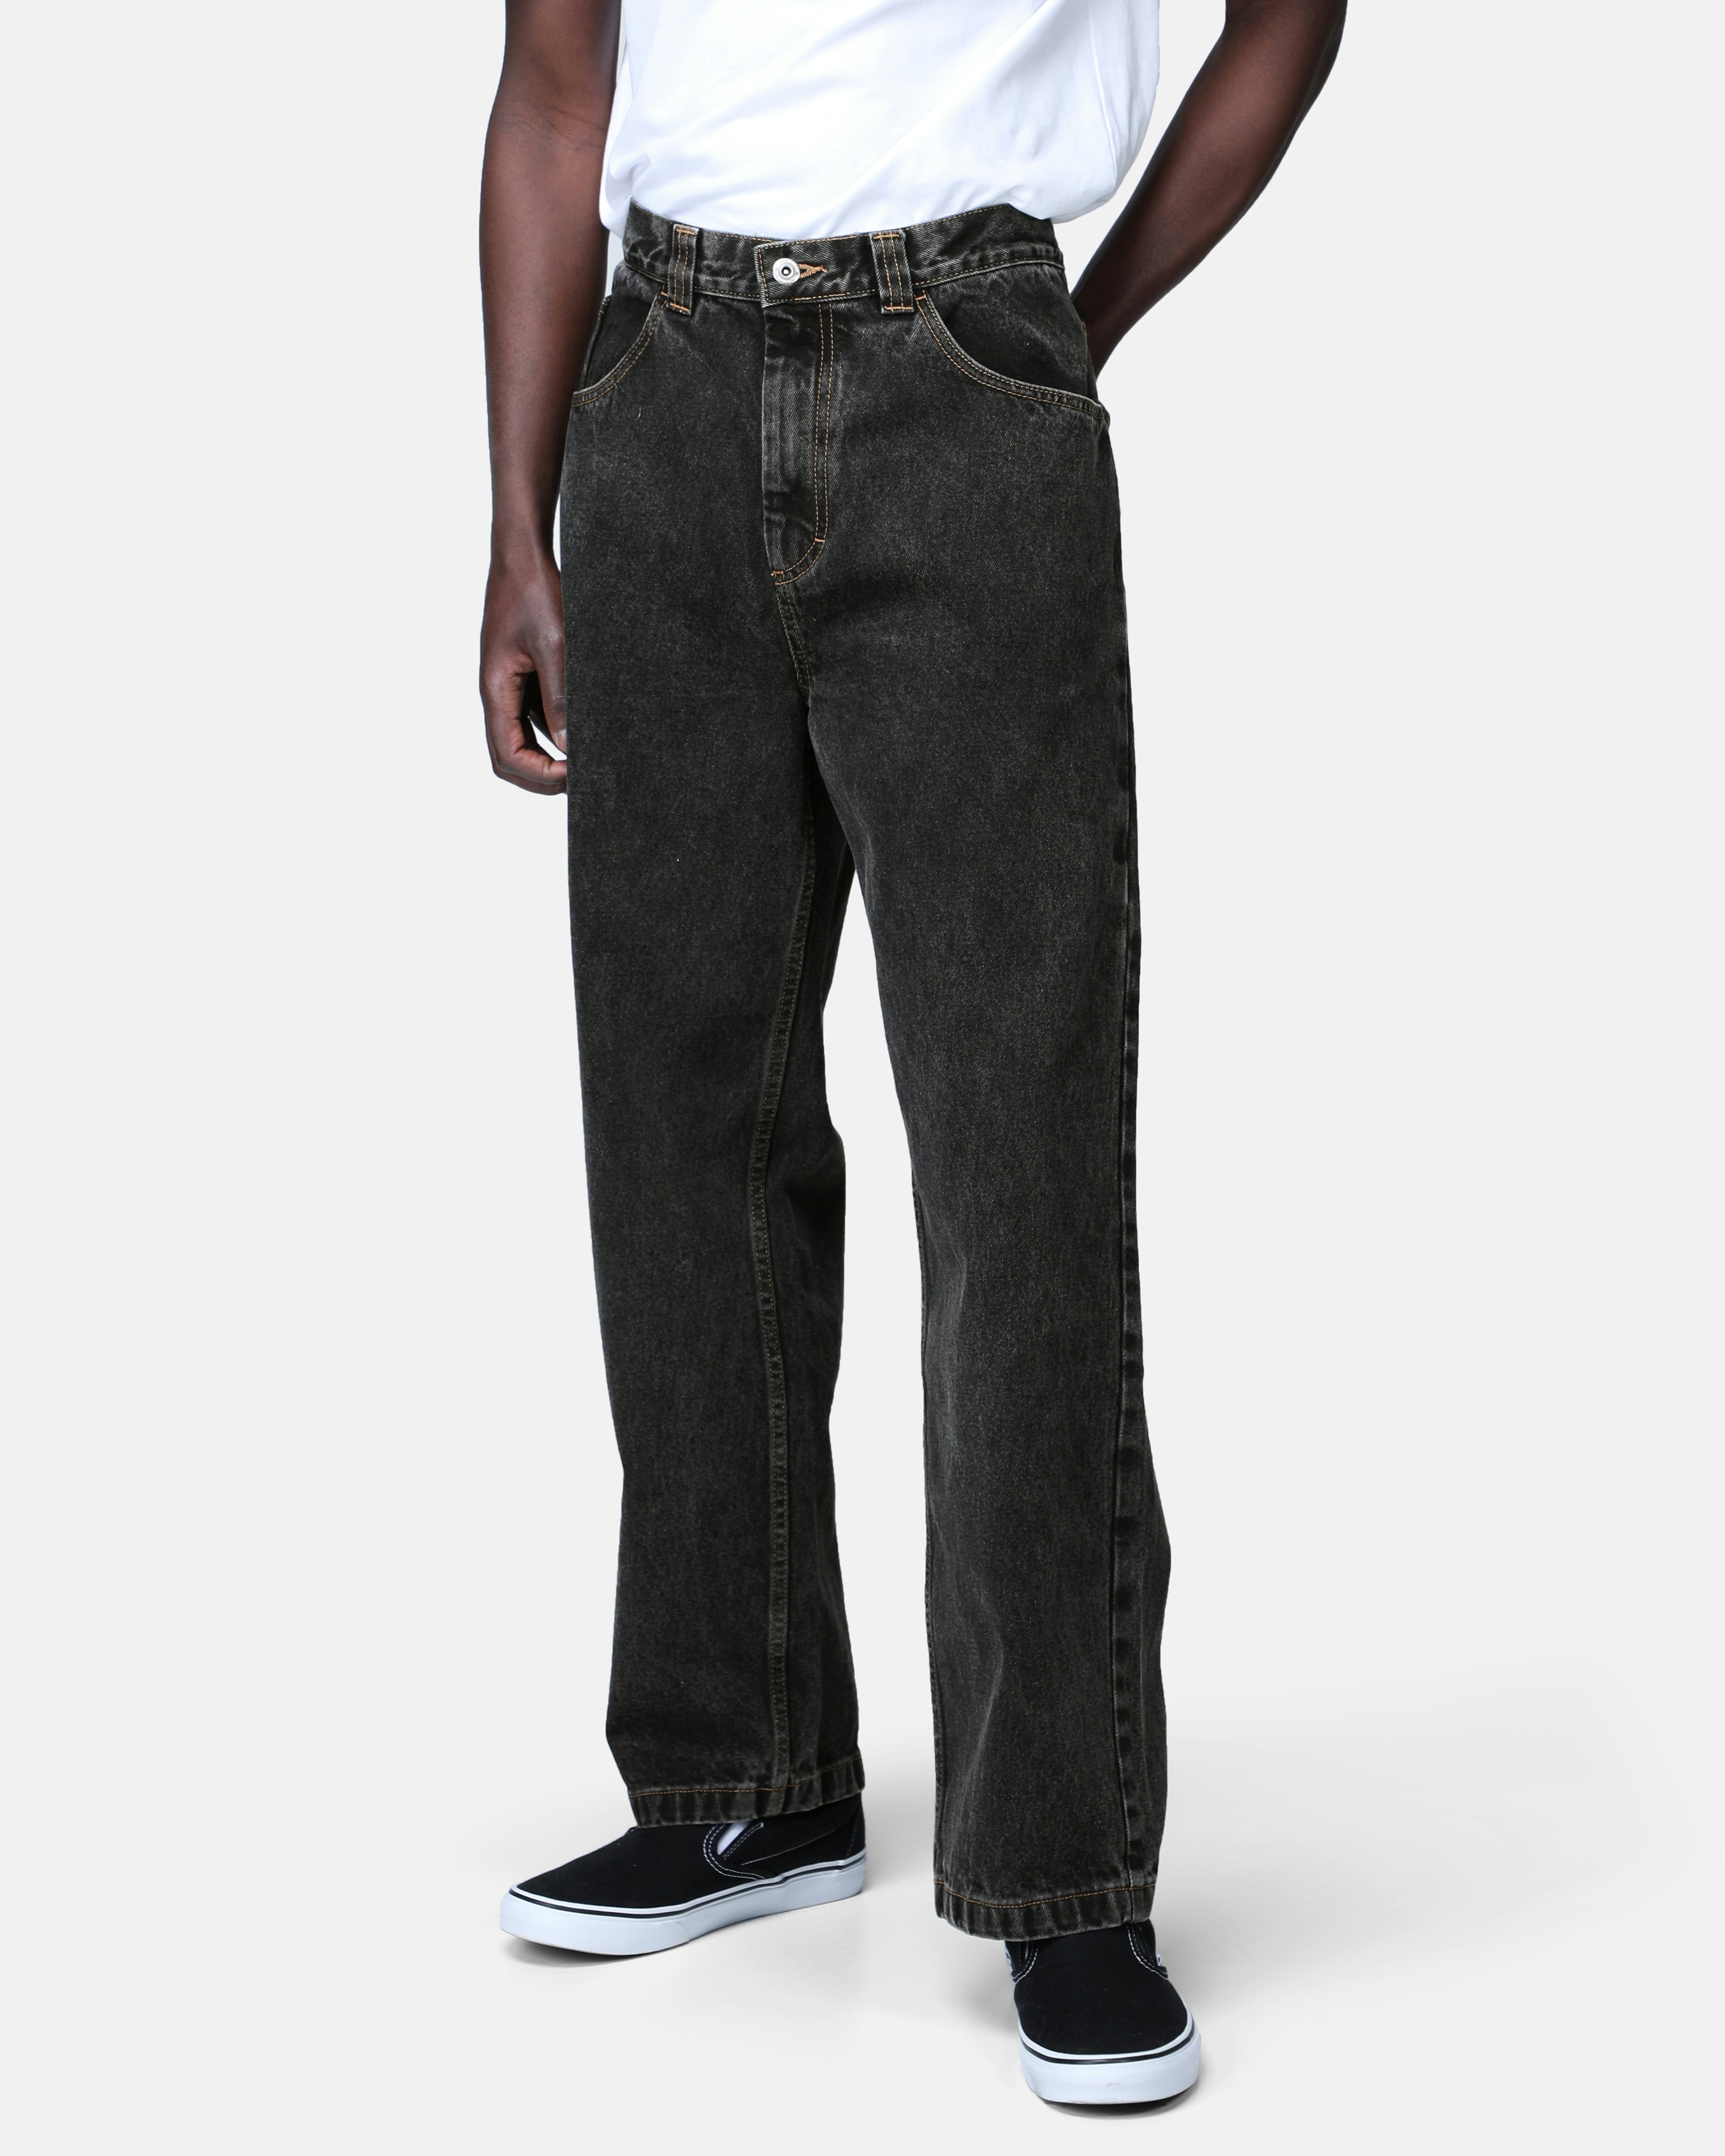 Polar Skate Co. Jeans - 93 Denim Black | Unisex | Junkyard